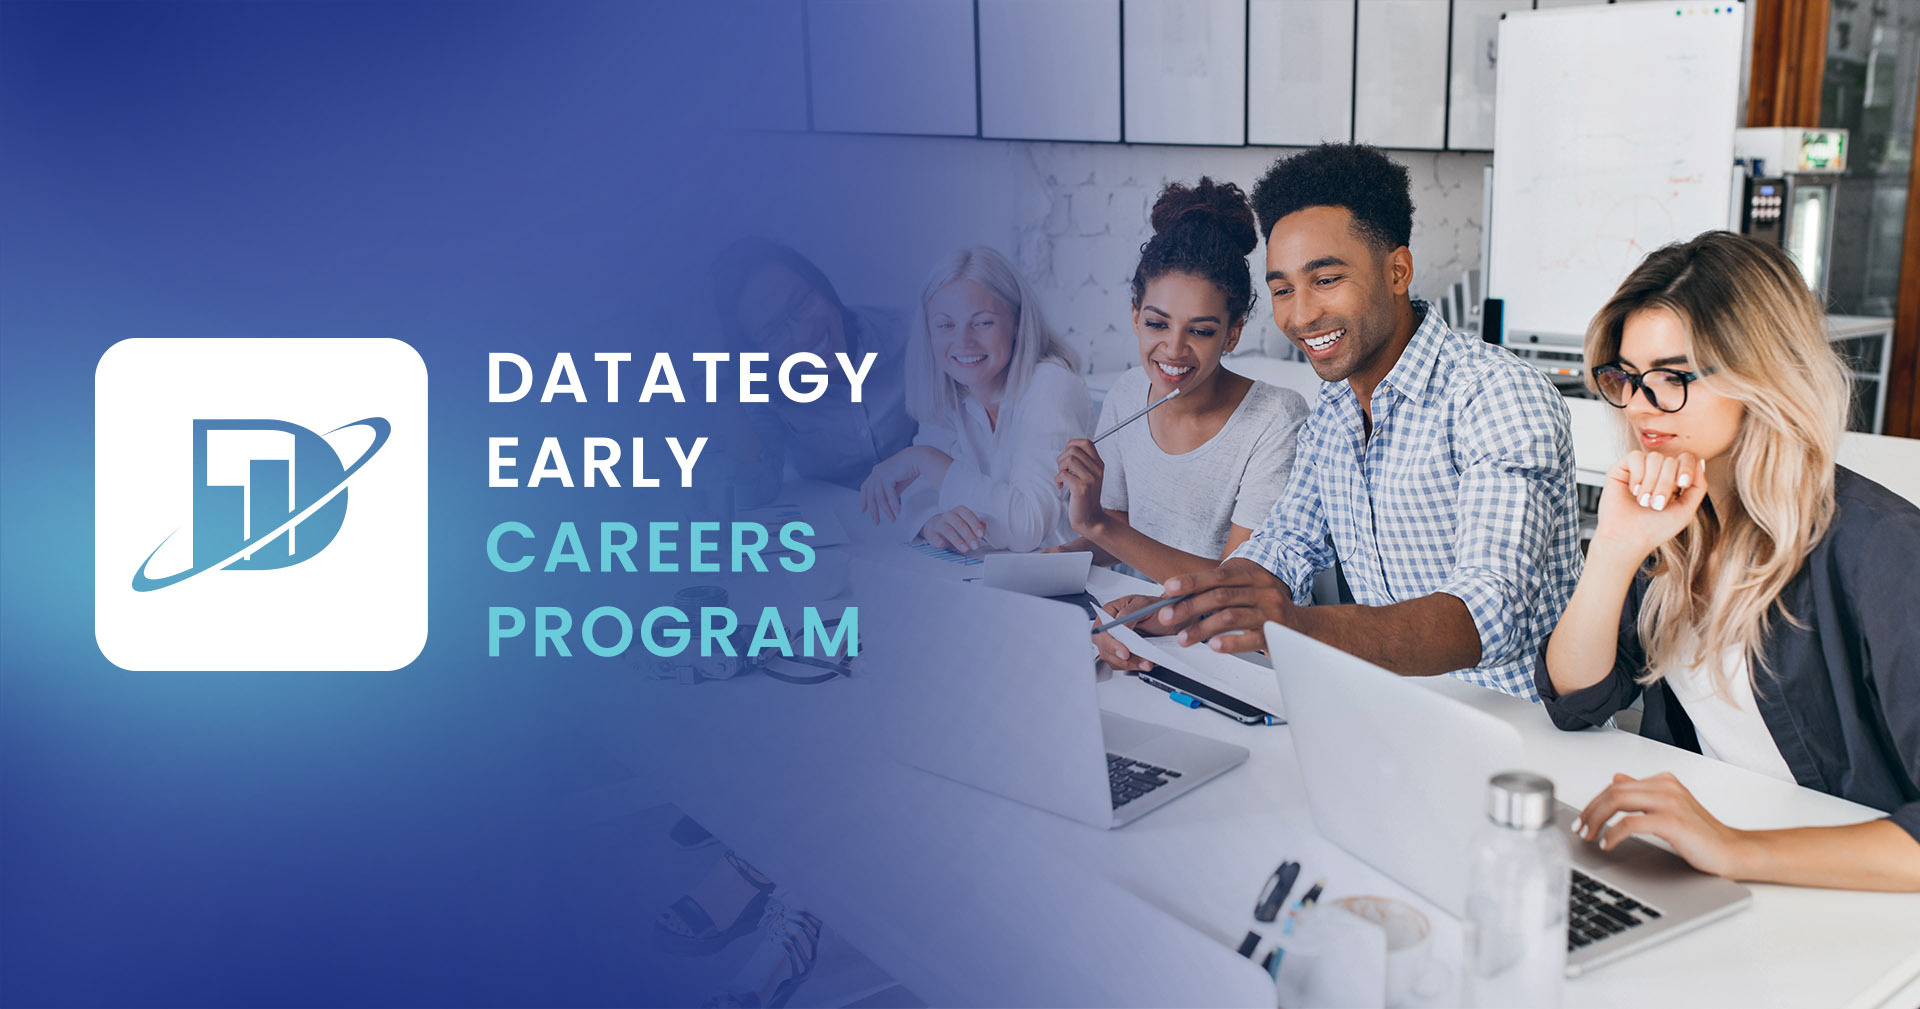 Datategy Early Careers Program